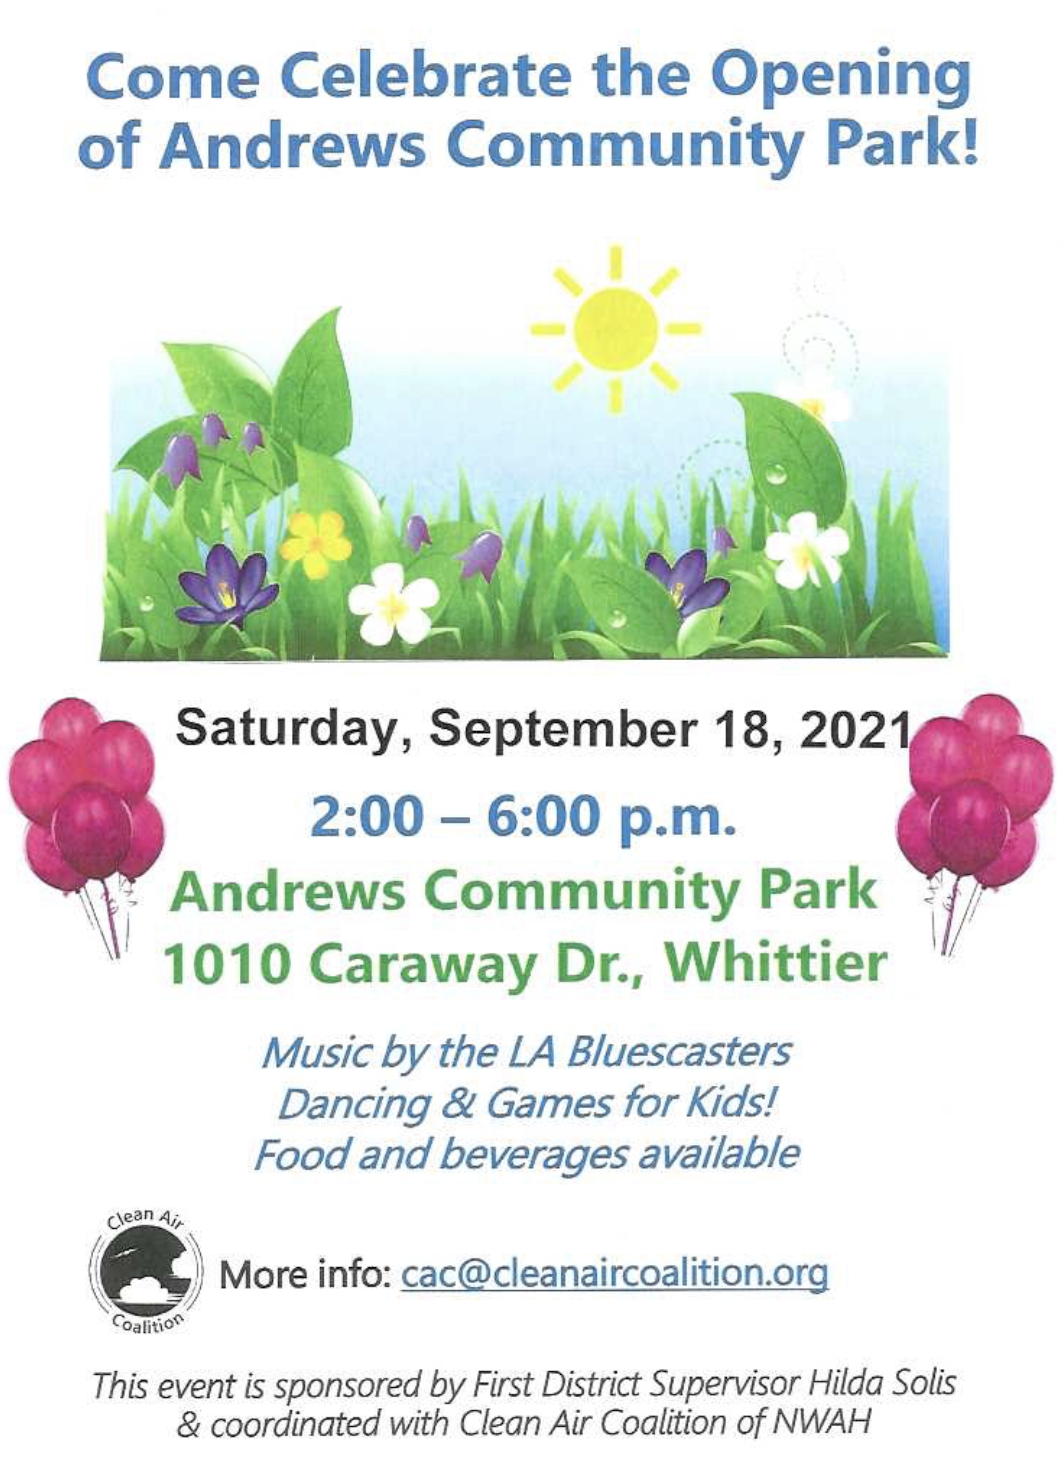 Andrews Community Park opening celebration flyer.